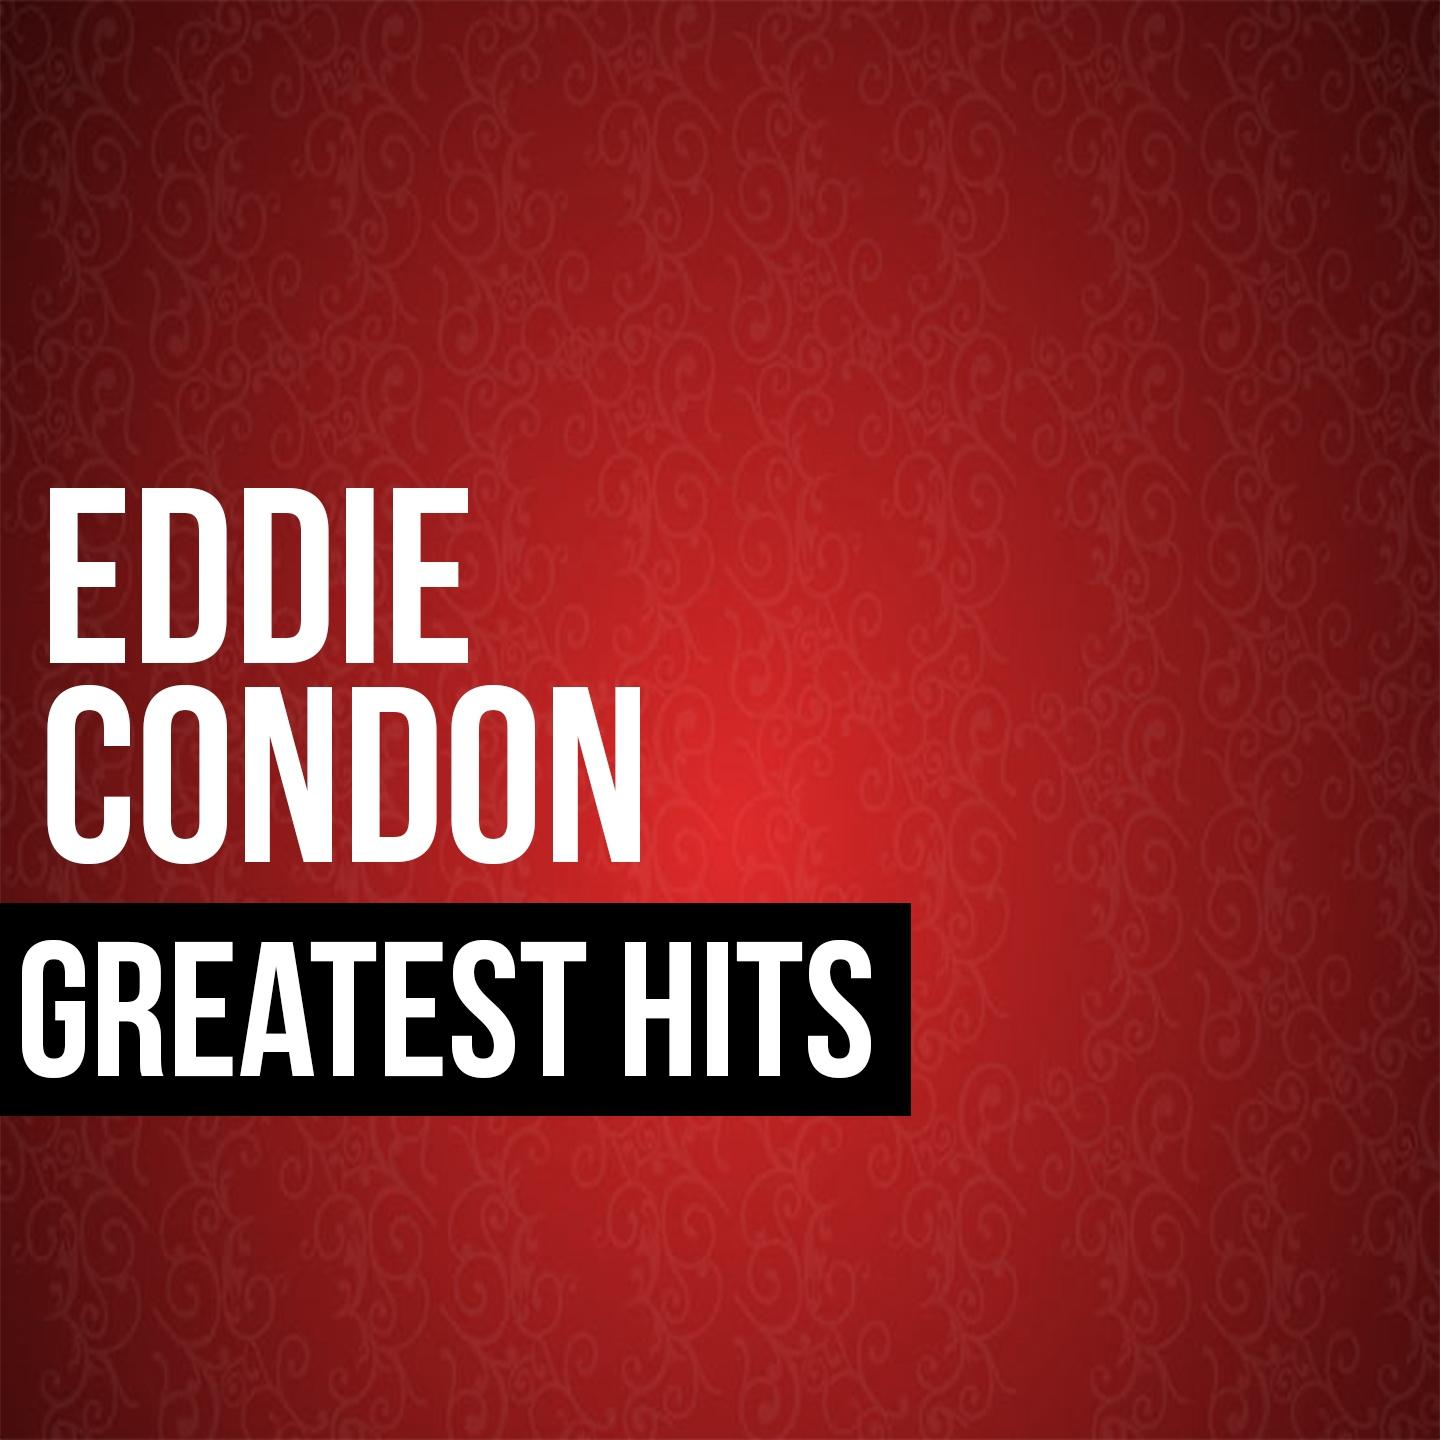 Eddie Condon Greatest Hits